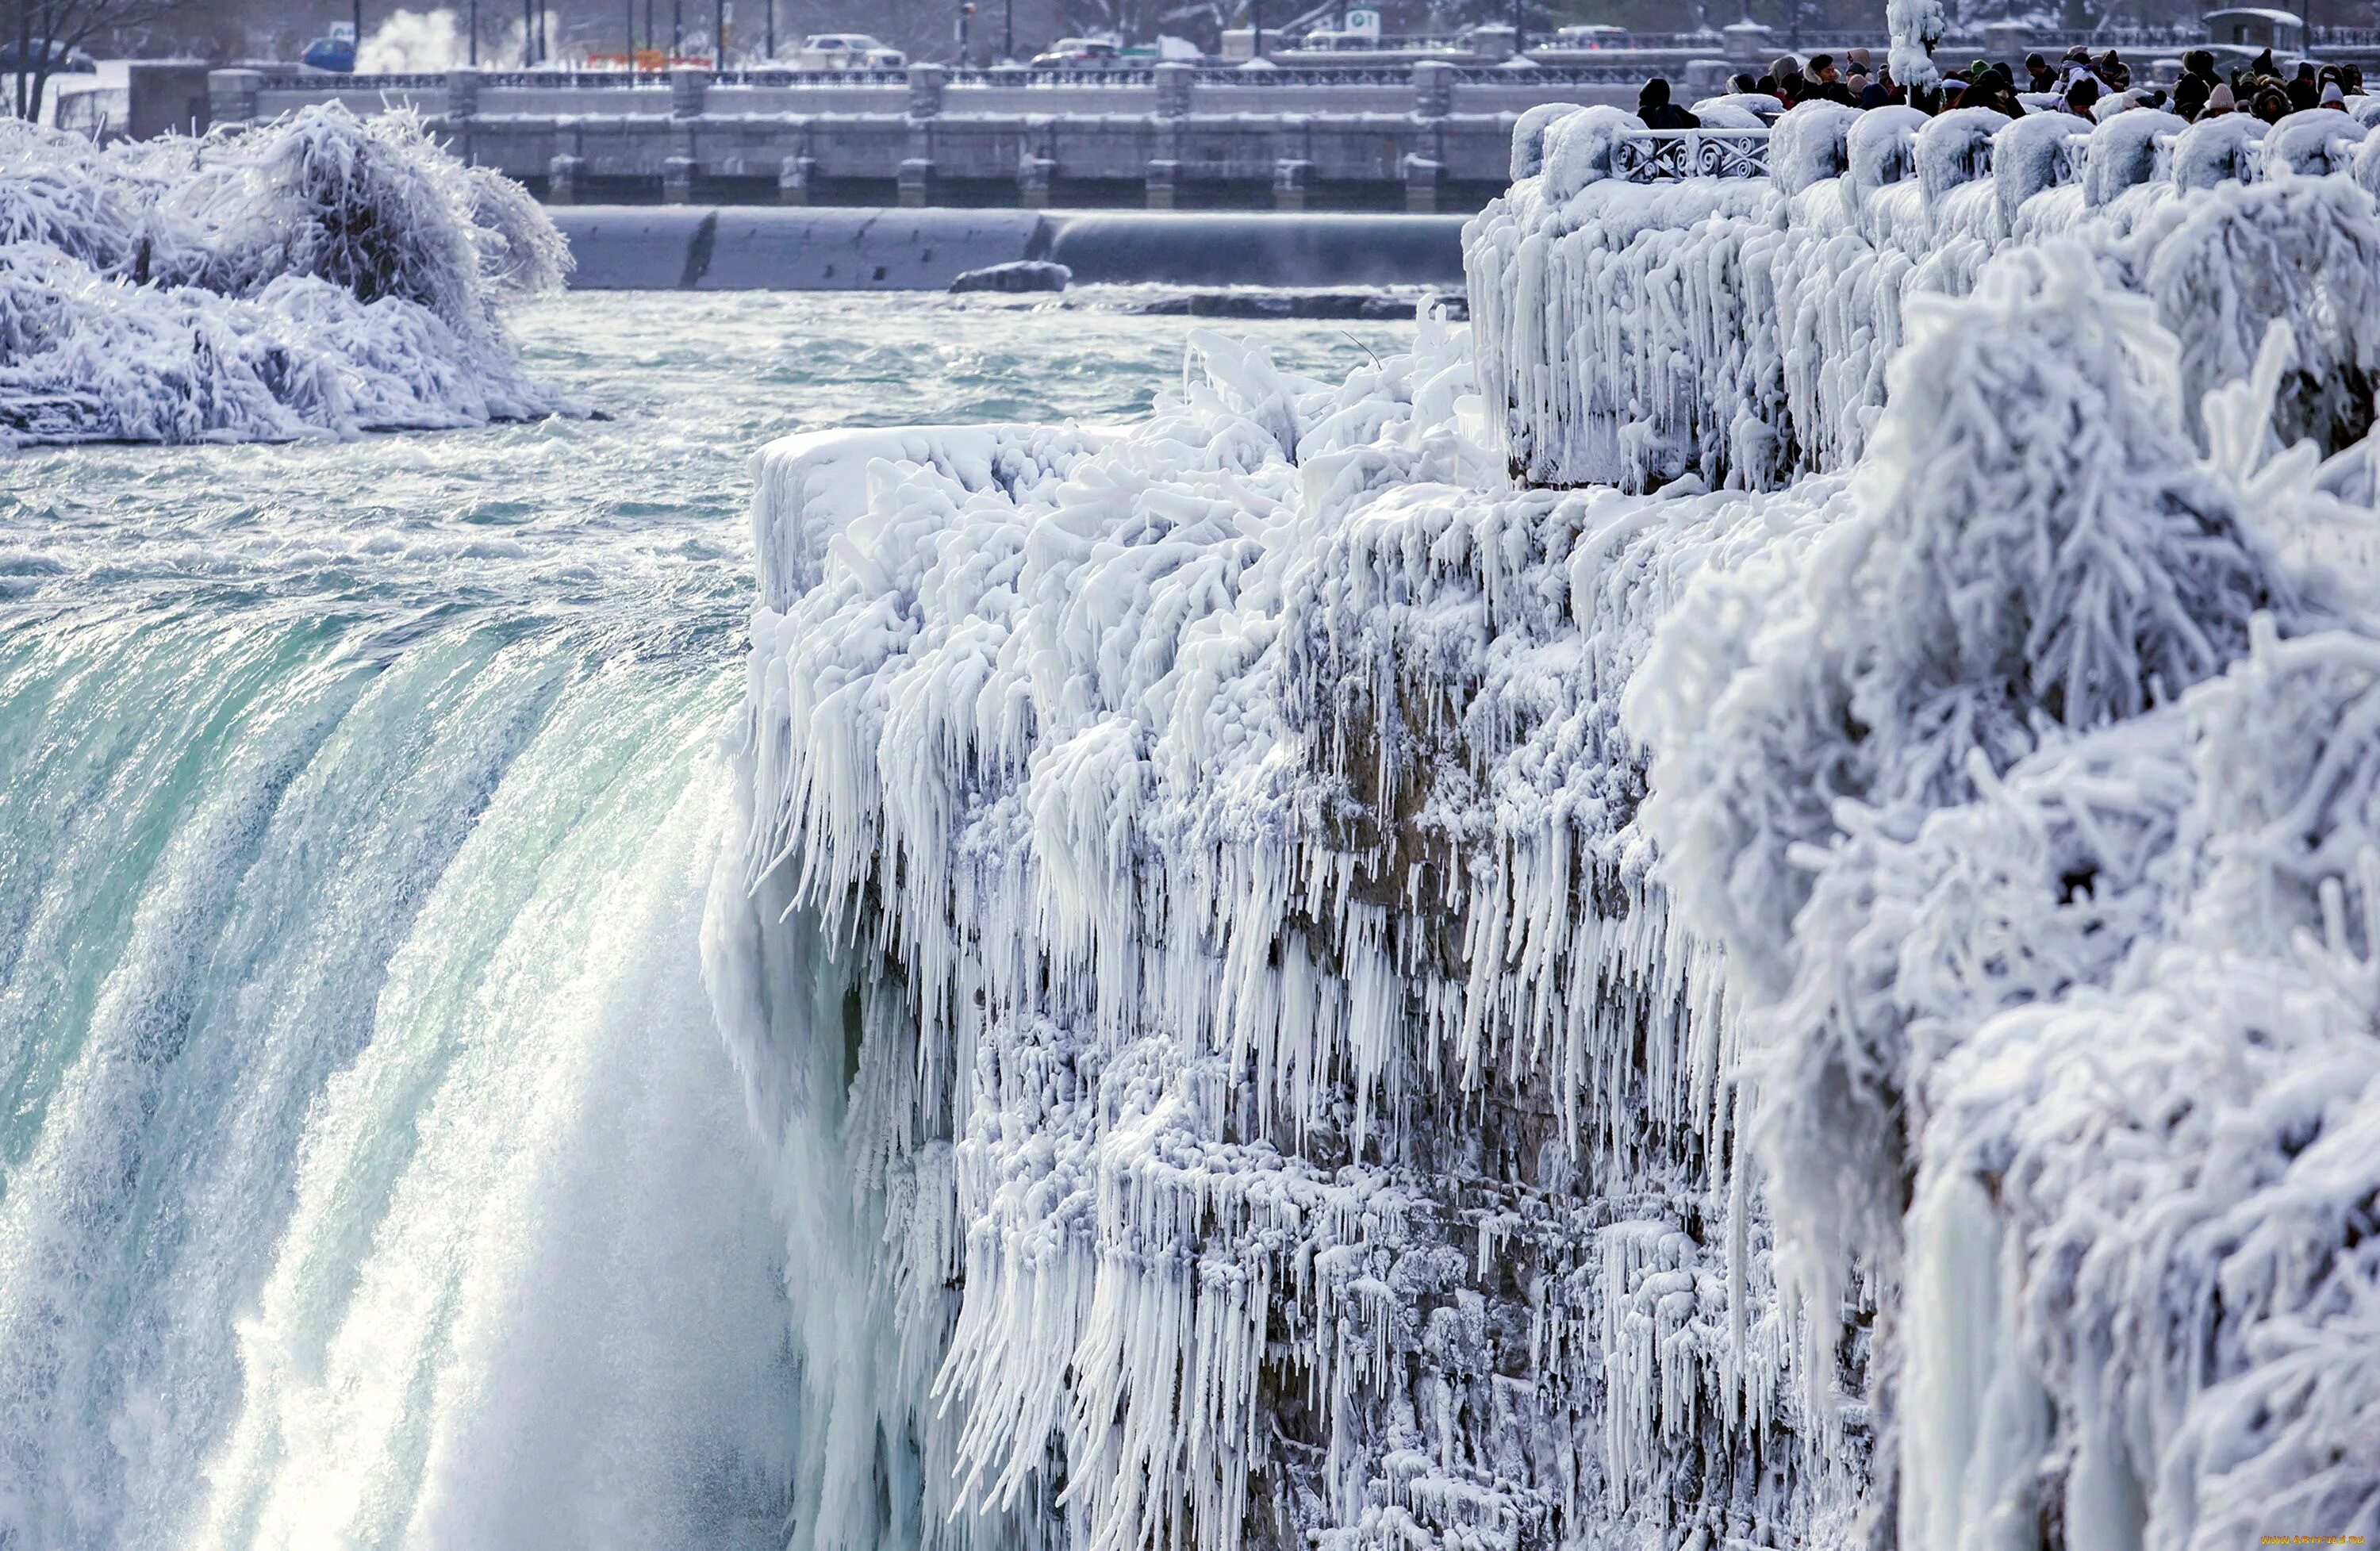 Грустный лед. Ниагарский водопад замерз. Ниагарский водопад Канада. Ниагарский водопад (штат Нью-Йорк). Ниагарский водопад зимой.